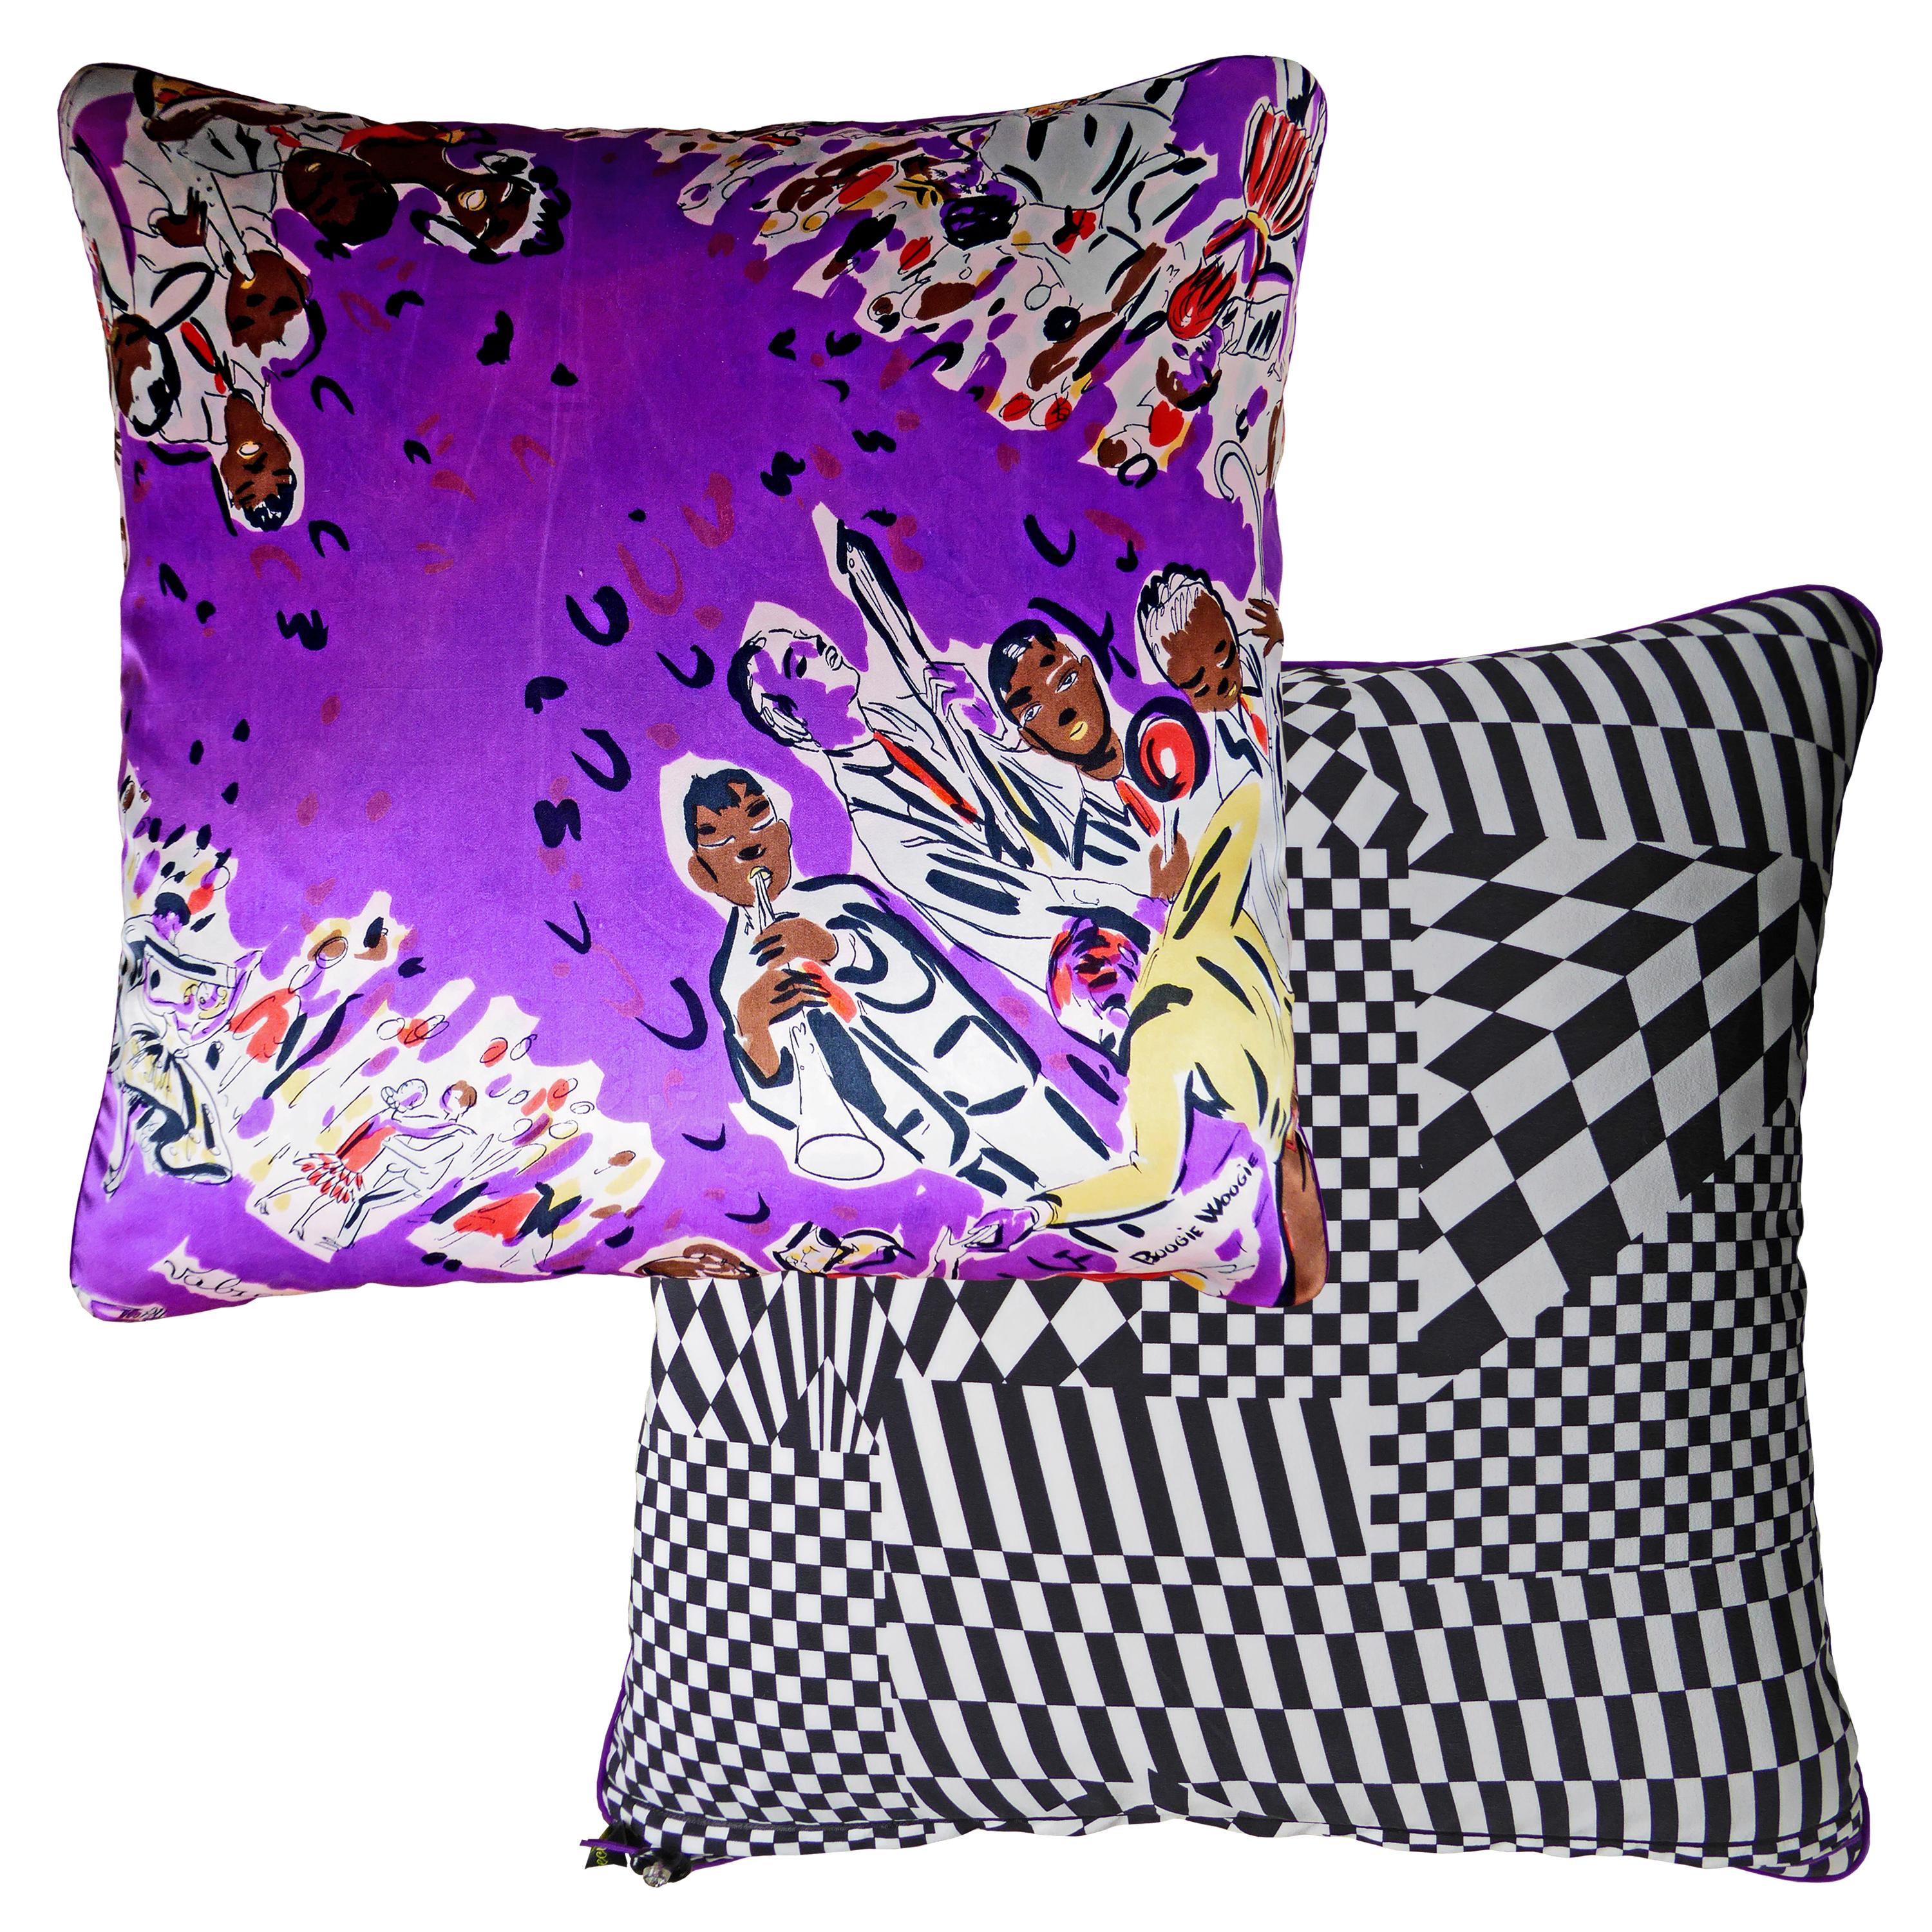 Organic Modern ‘Vintage Cushions’ Luxury Bespoke Silk Pillow 'Boogie Woogie', Made in London